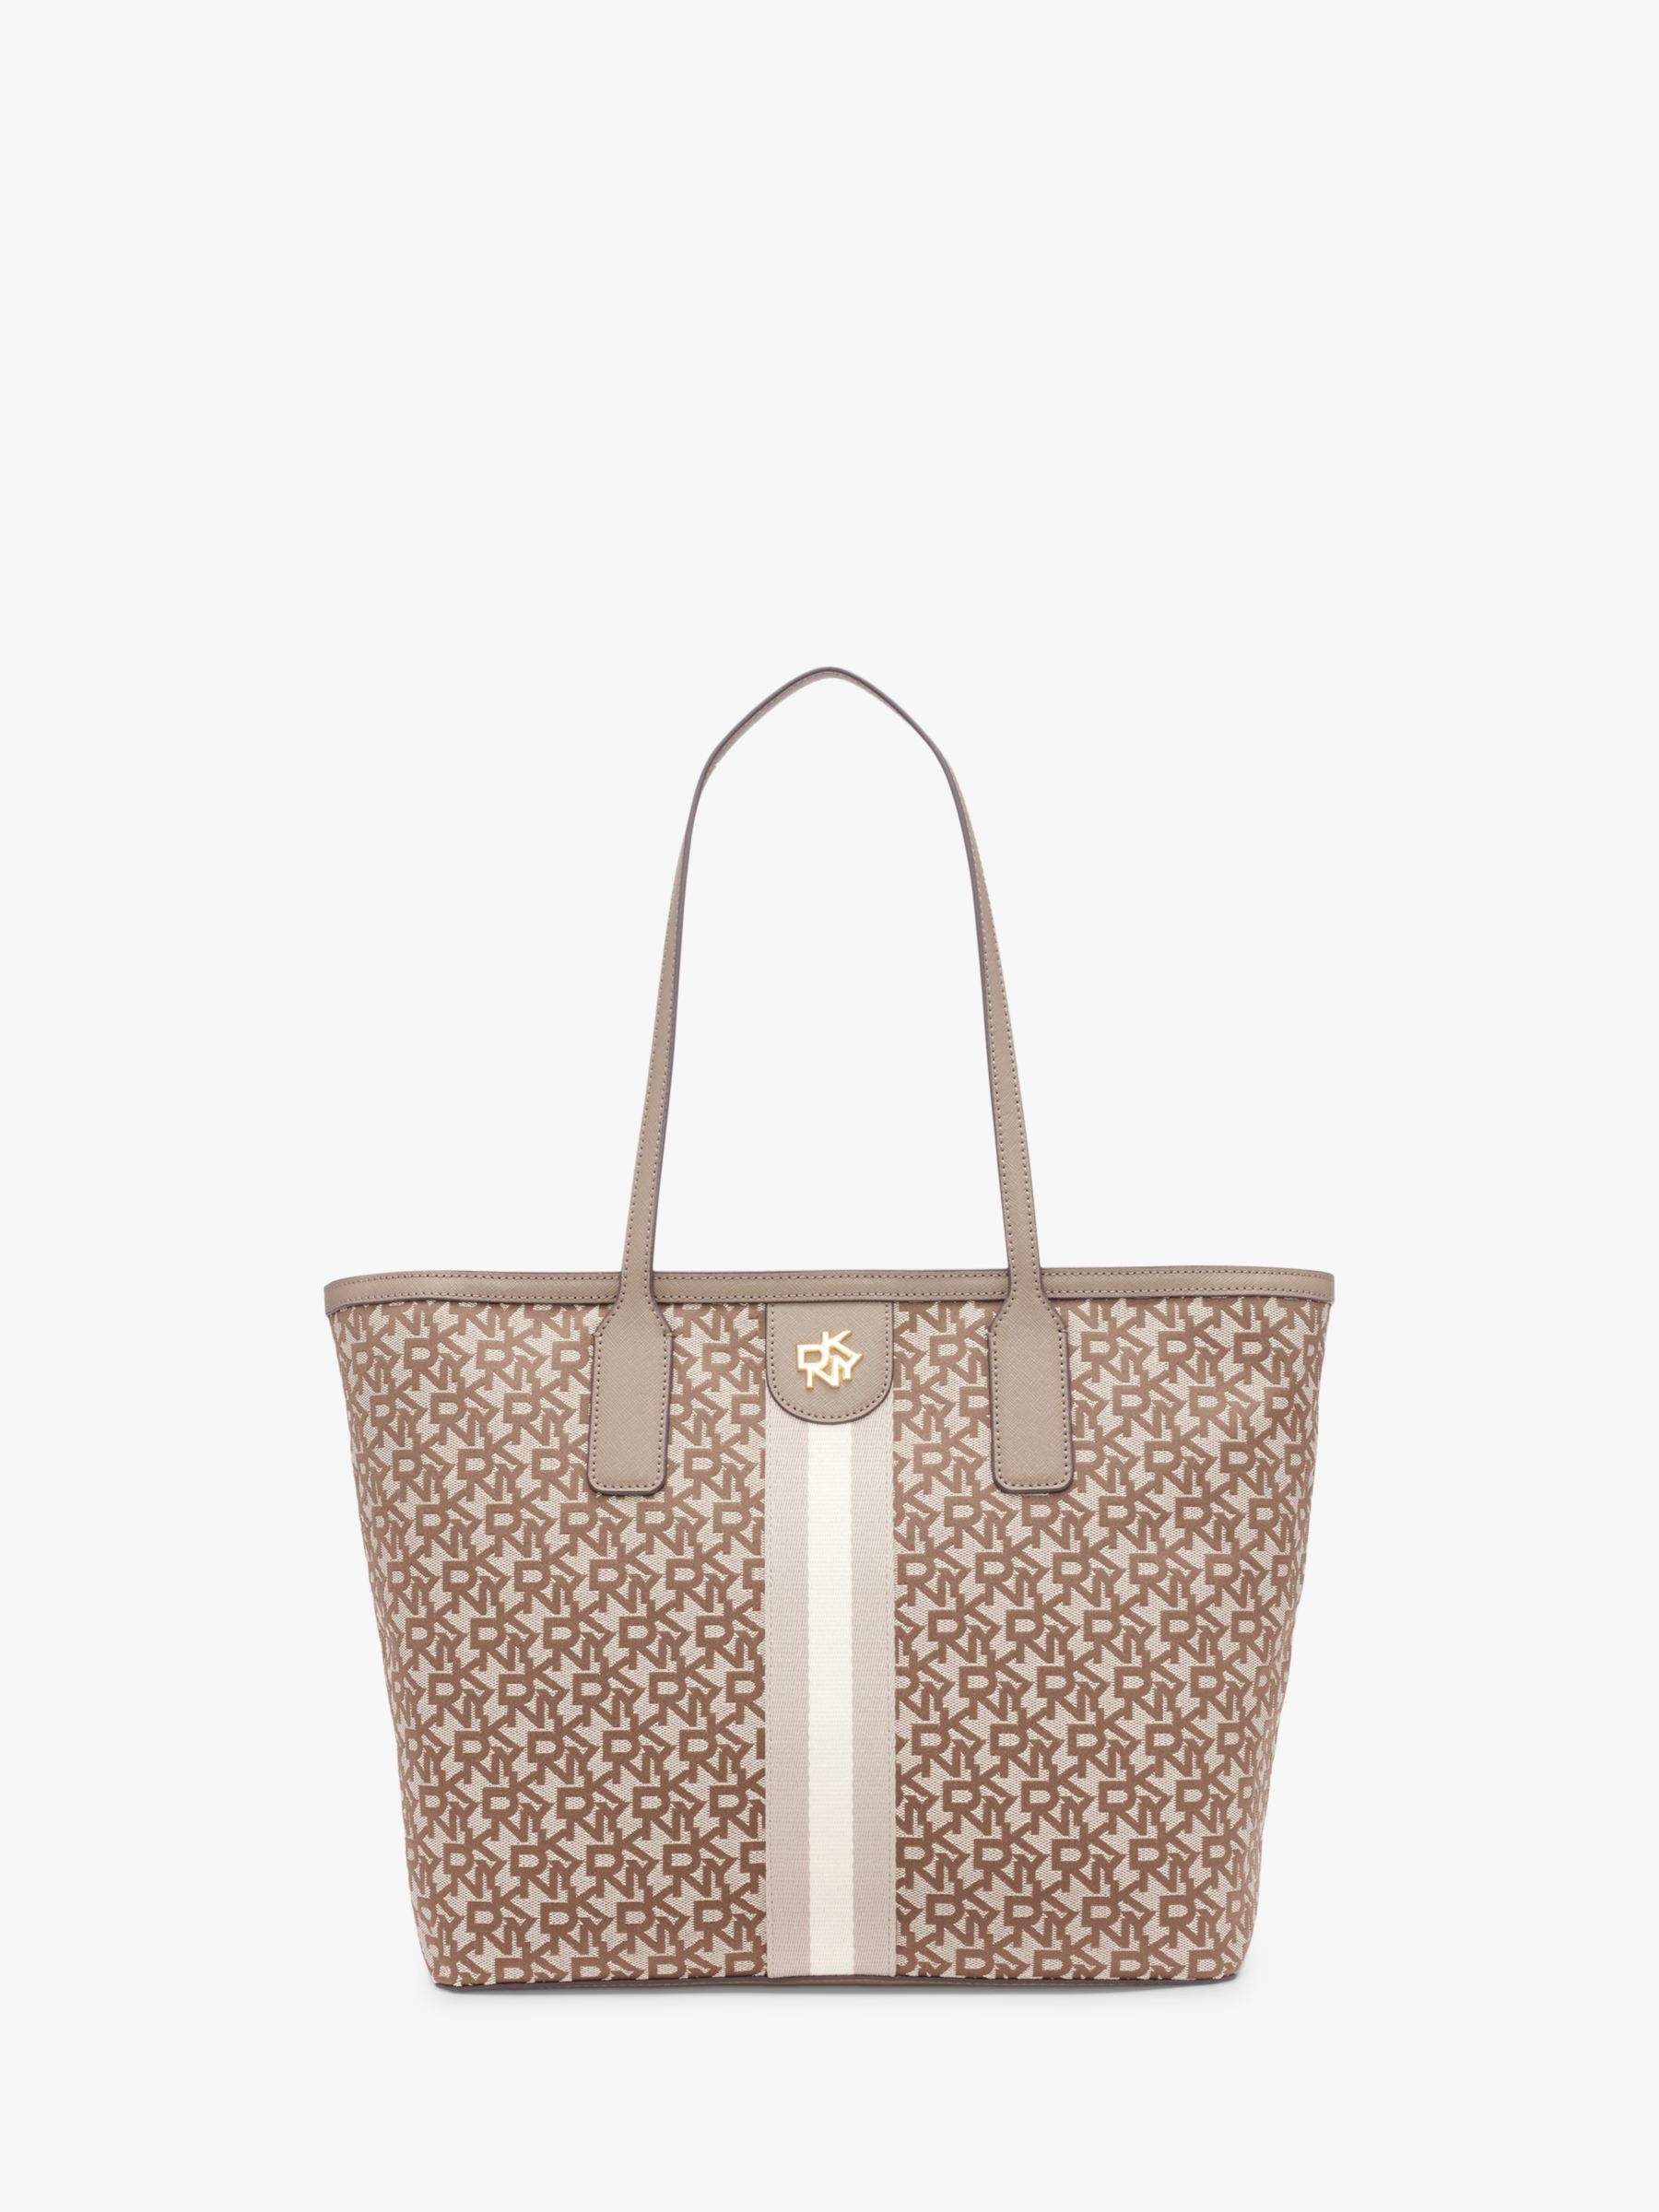 Carol handbag by DKNY